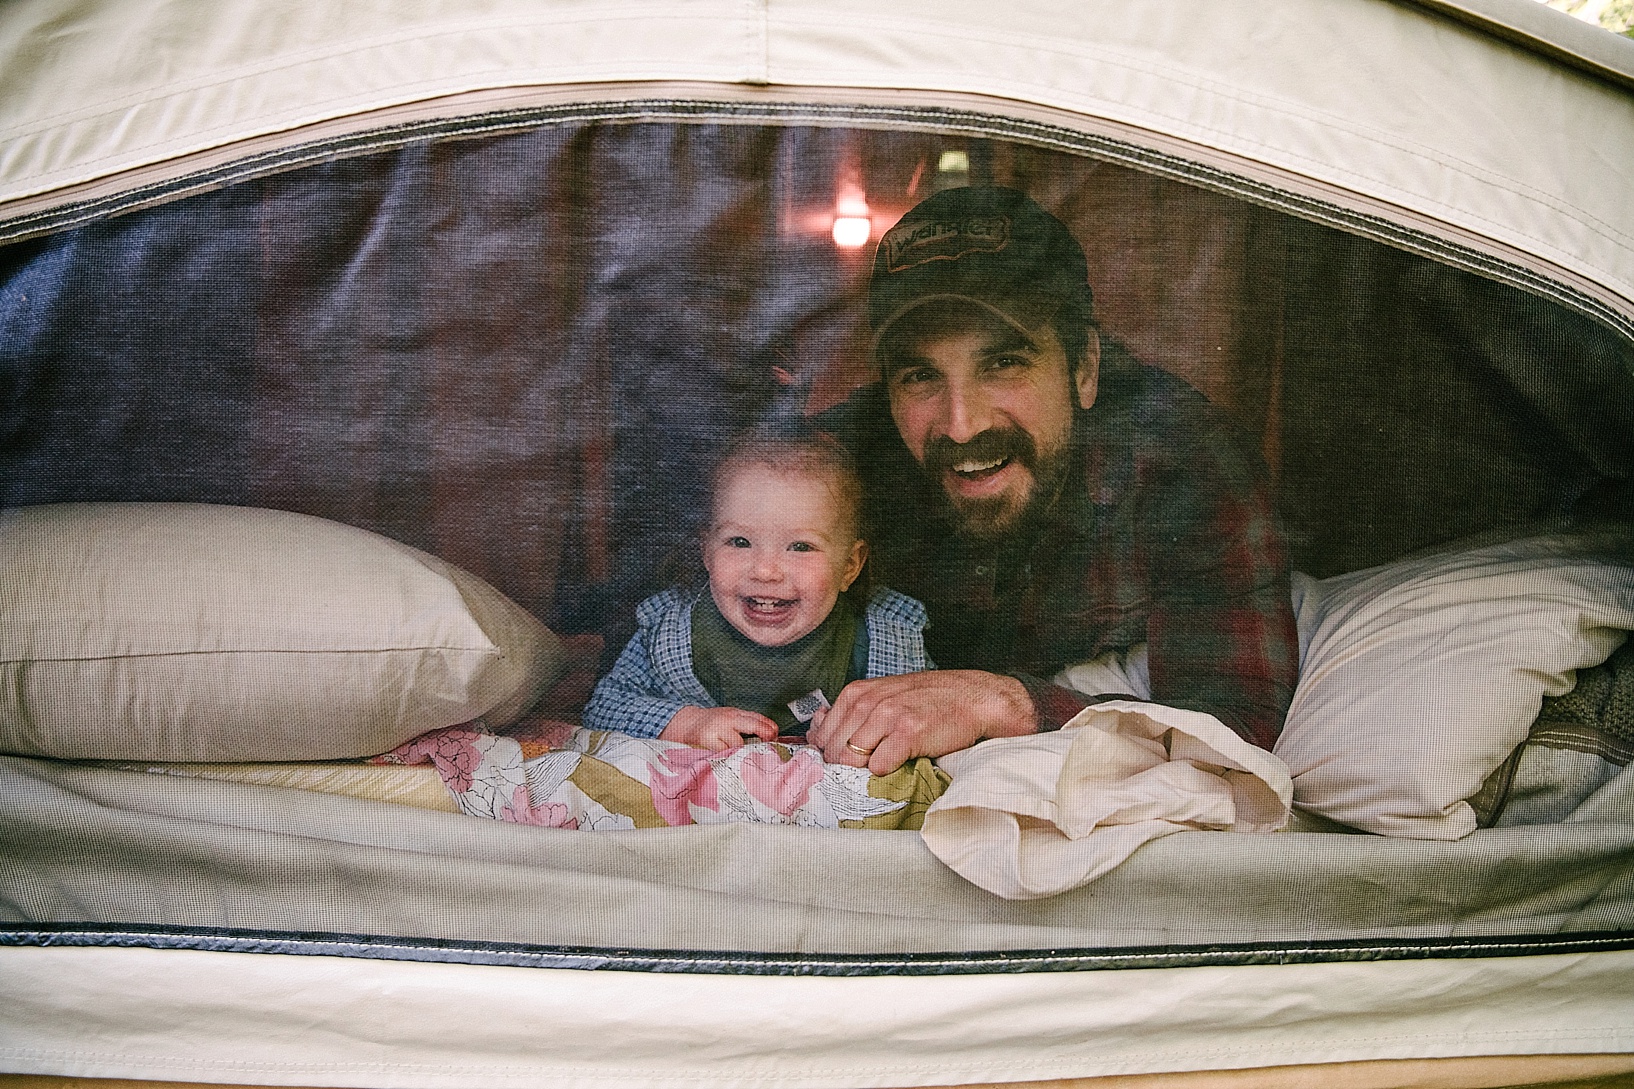 dad and toddler in pop up camper